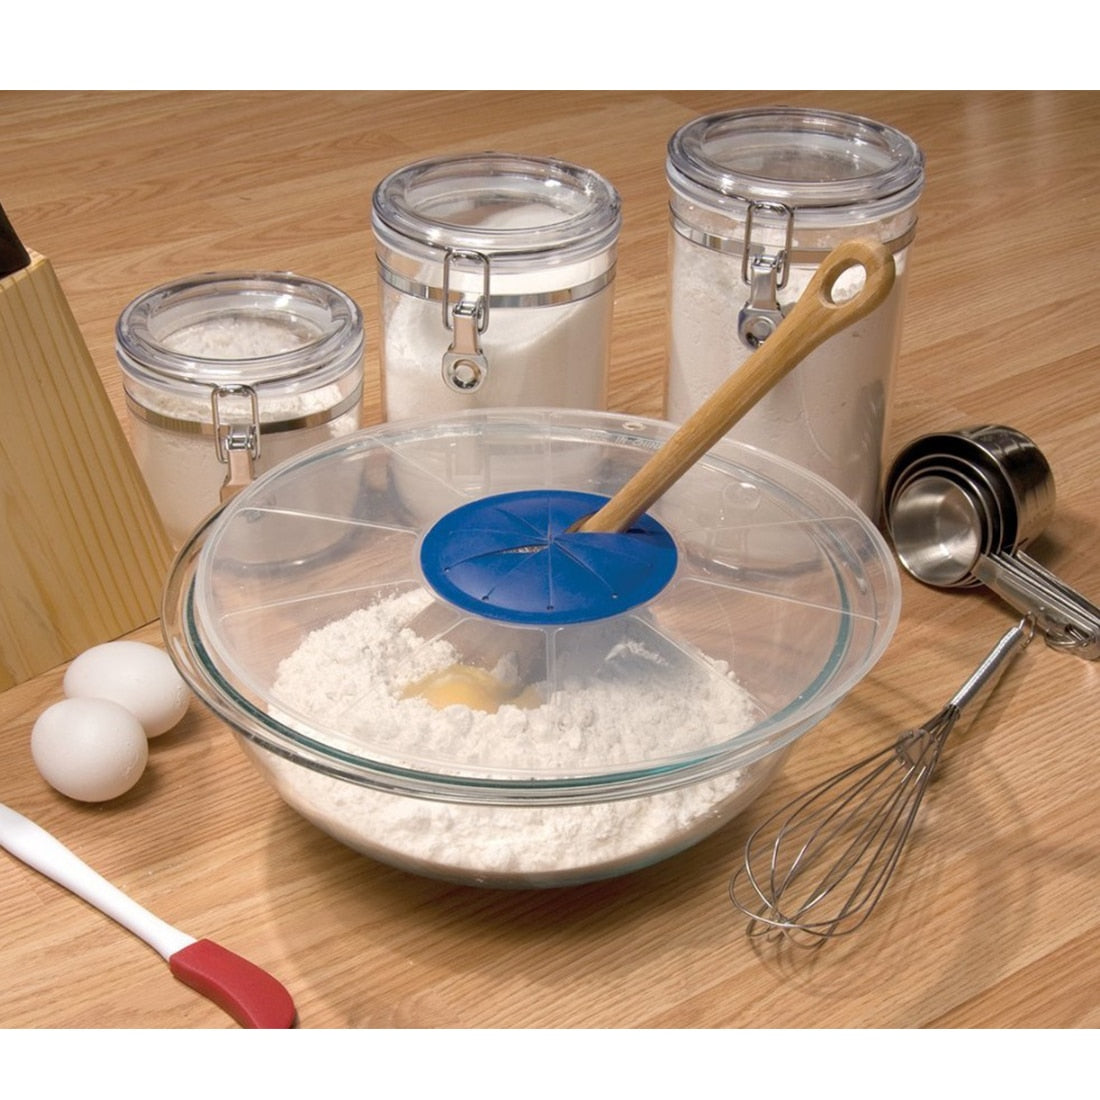 Silicone Splatter Screen Baking Mixing Bowl Guard Shop kitchen home